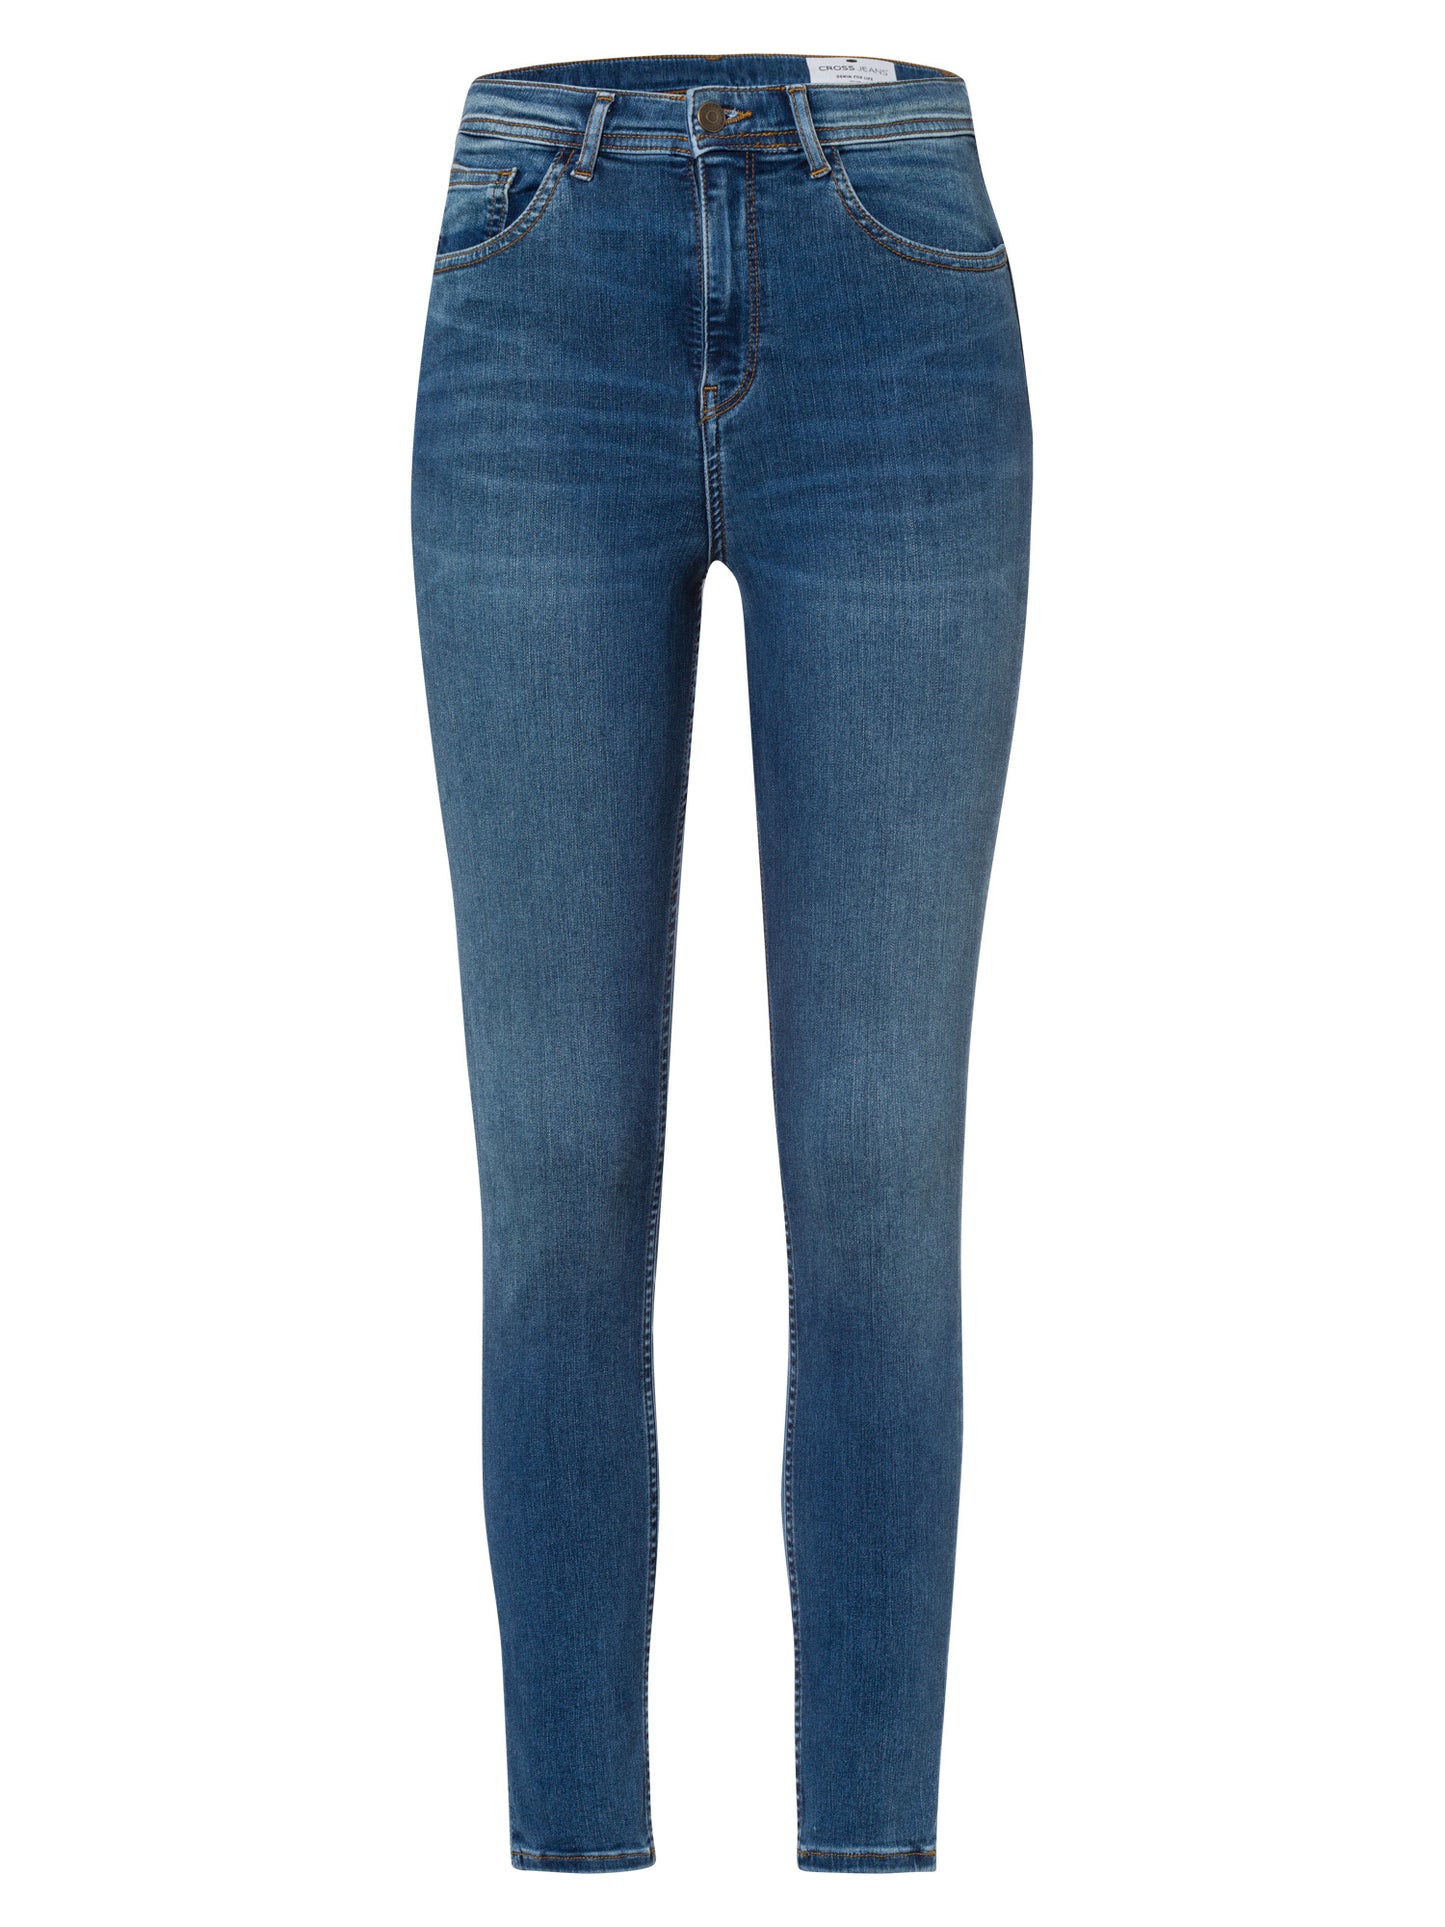 Judy women's jeans super skinny fit high waist ankle length medium blue